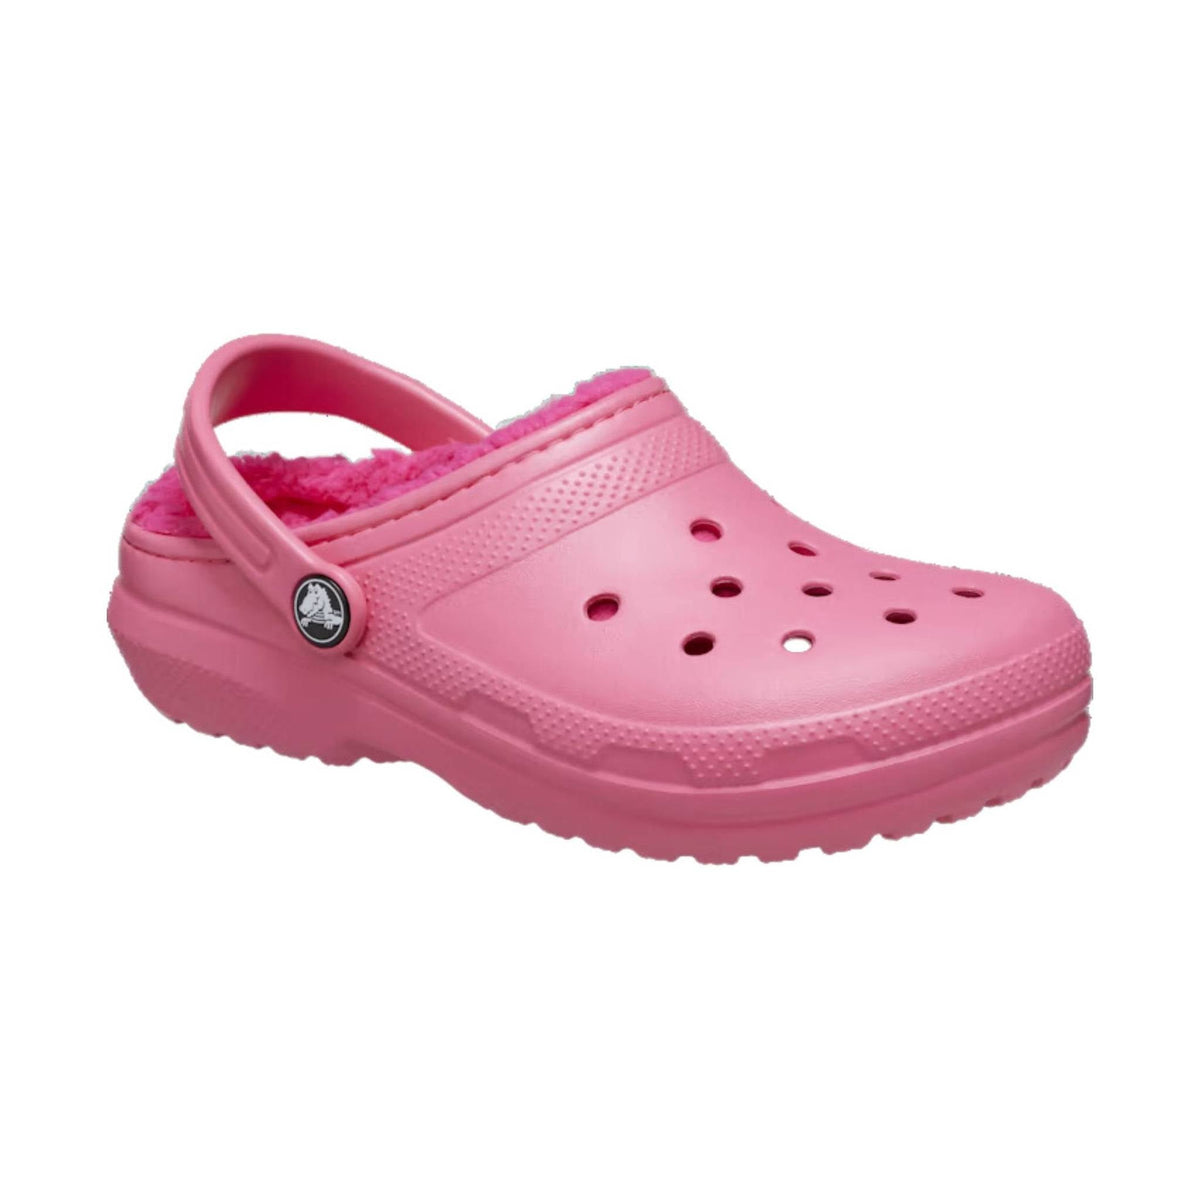 pink to make the boys winkkkkk 🩷🩷 #pink #designercrocs ##crocs